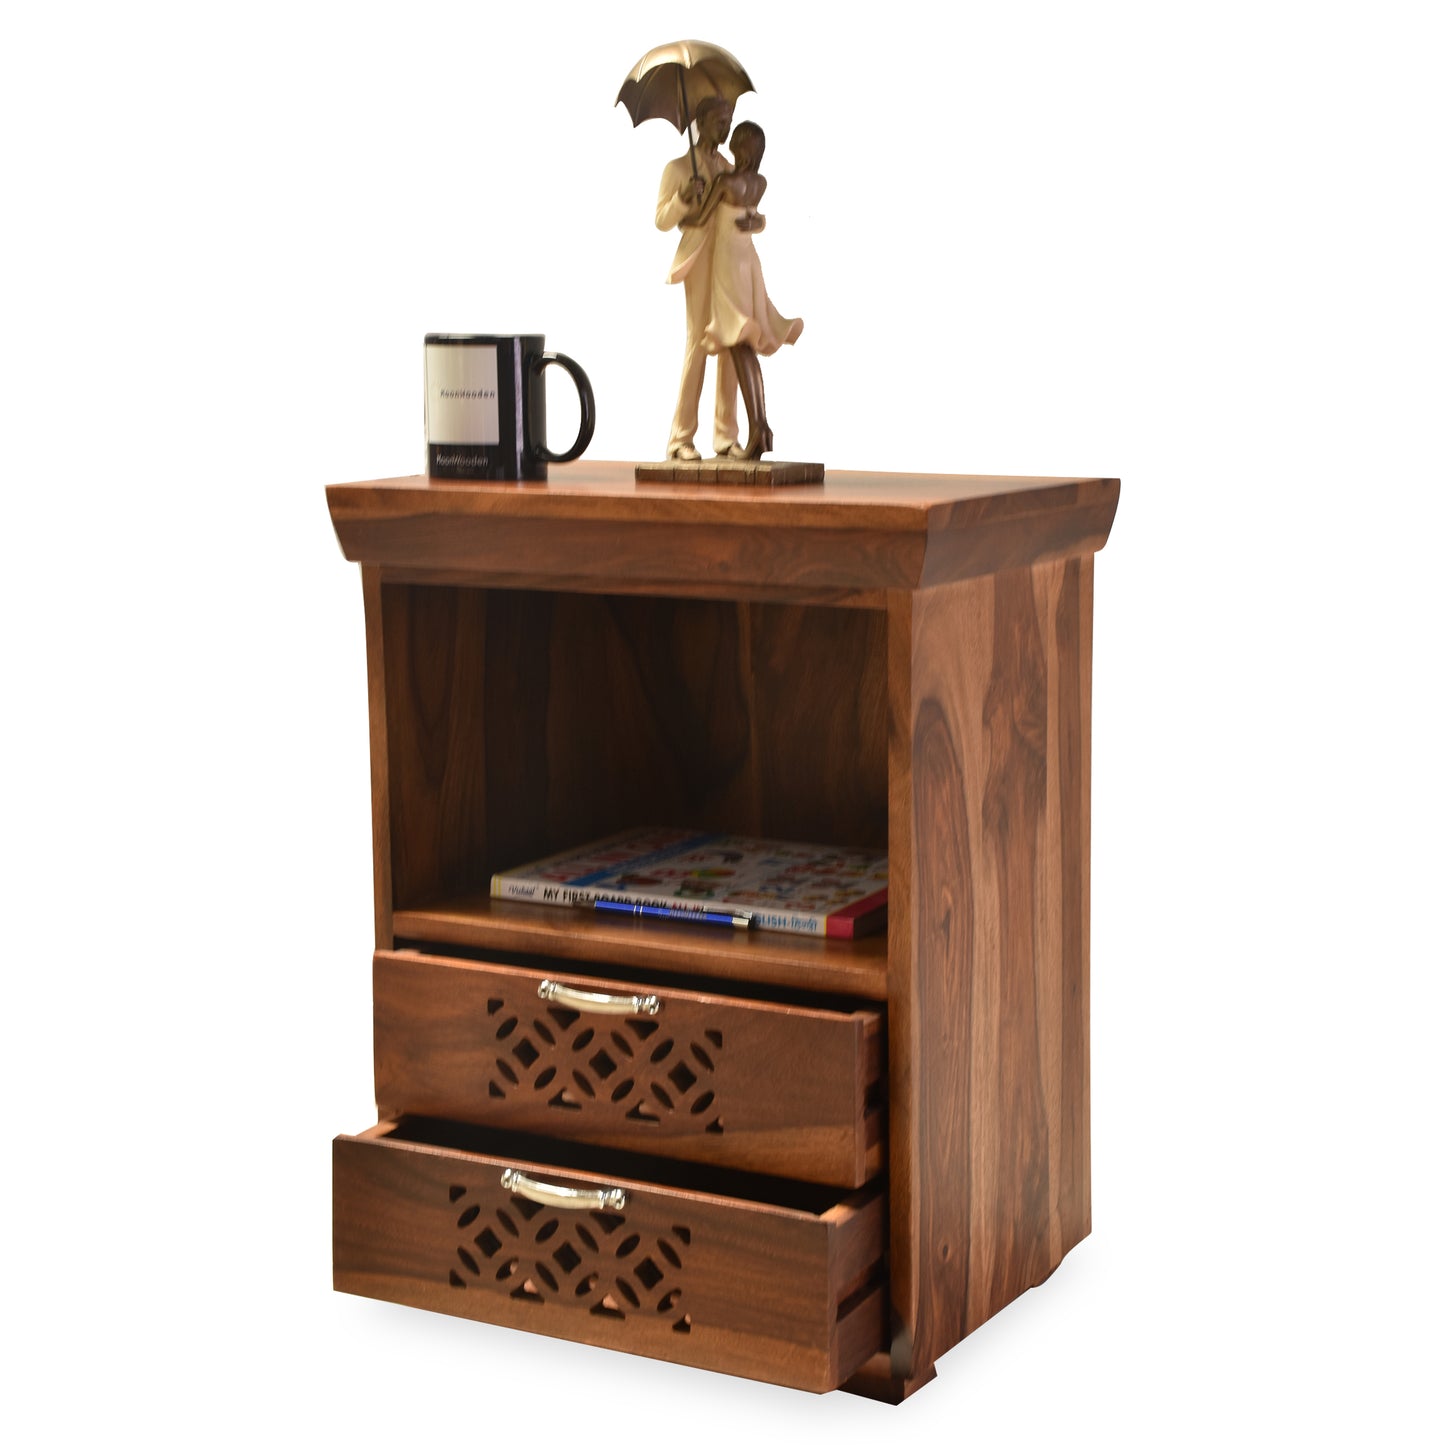 MoonWooden Wooden Bedside Table for Bedroom | Wooden Nightstand Lamp Table with 2 Drawer Storage | Sheesham Wood, Dark Honey